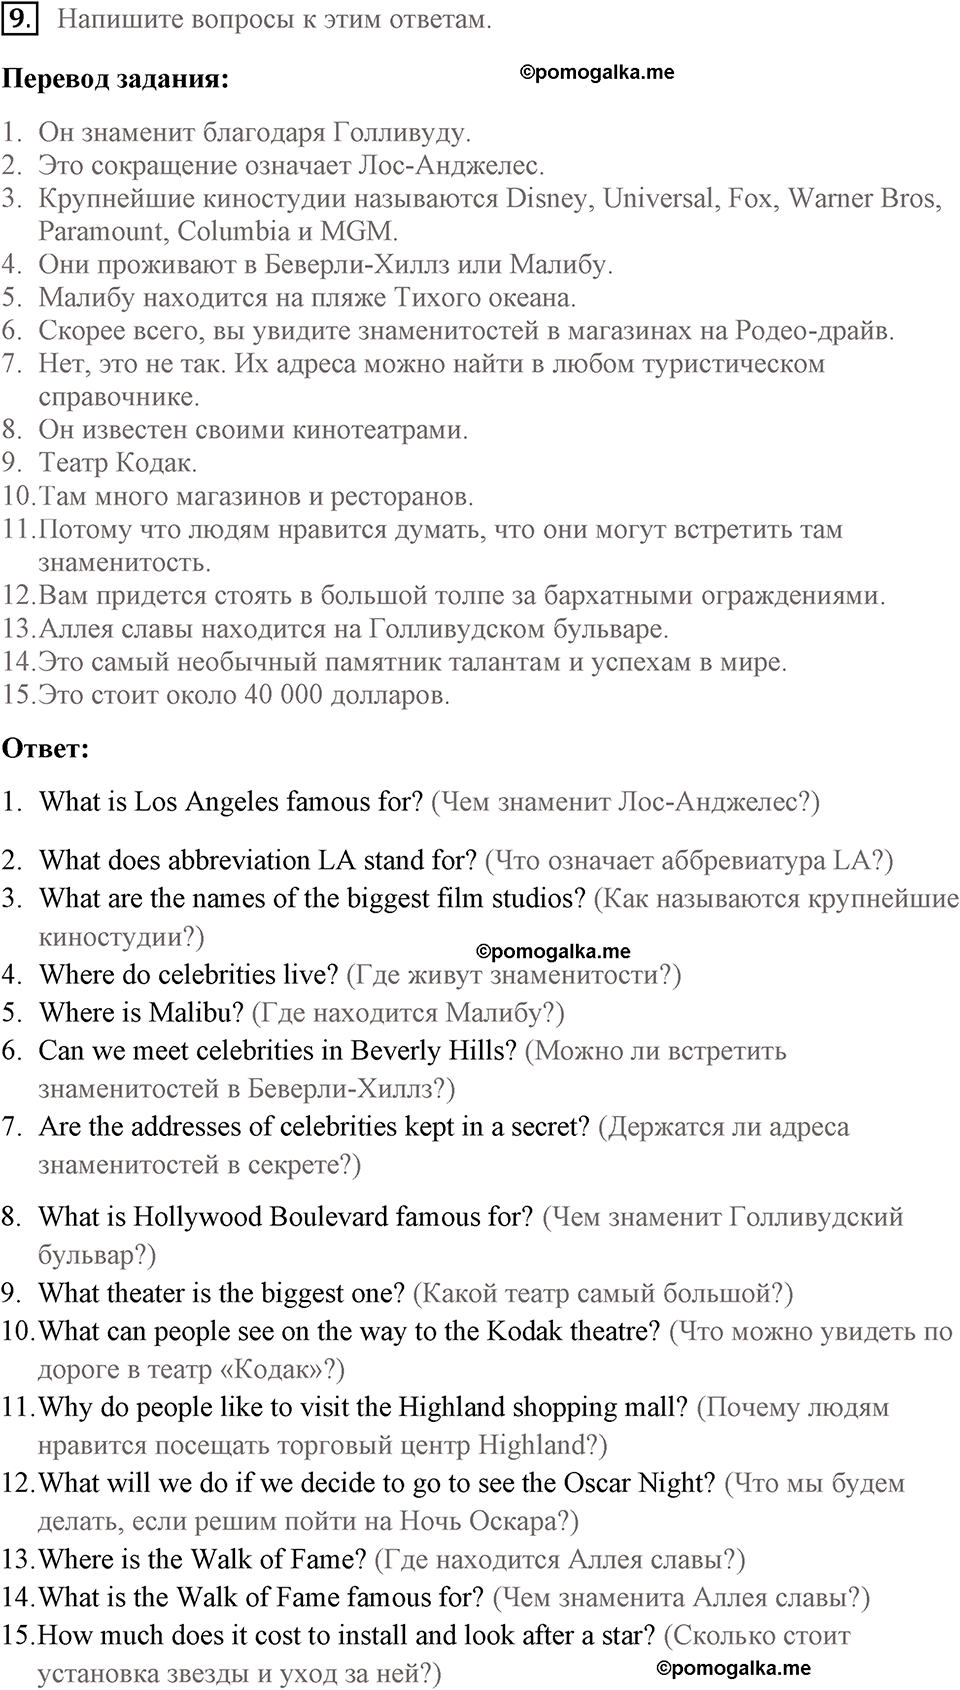 Unit 5 lesson 1-2 exercise №9 английский язык 9 класс Happy English.ru